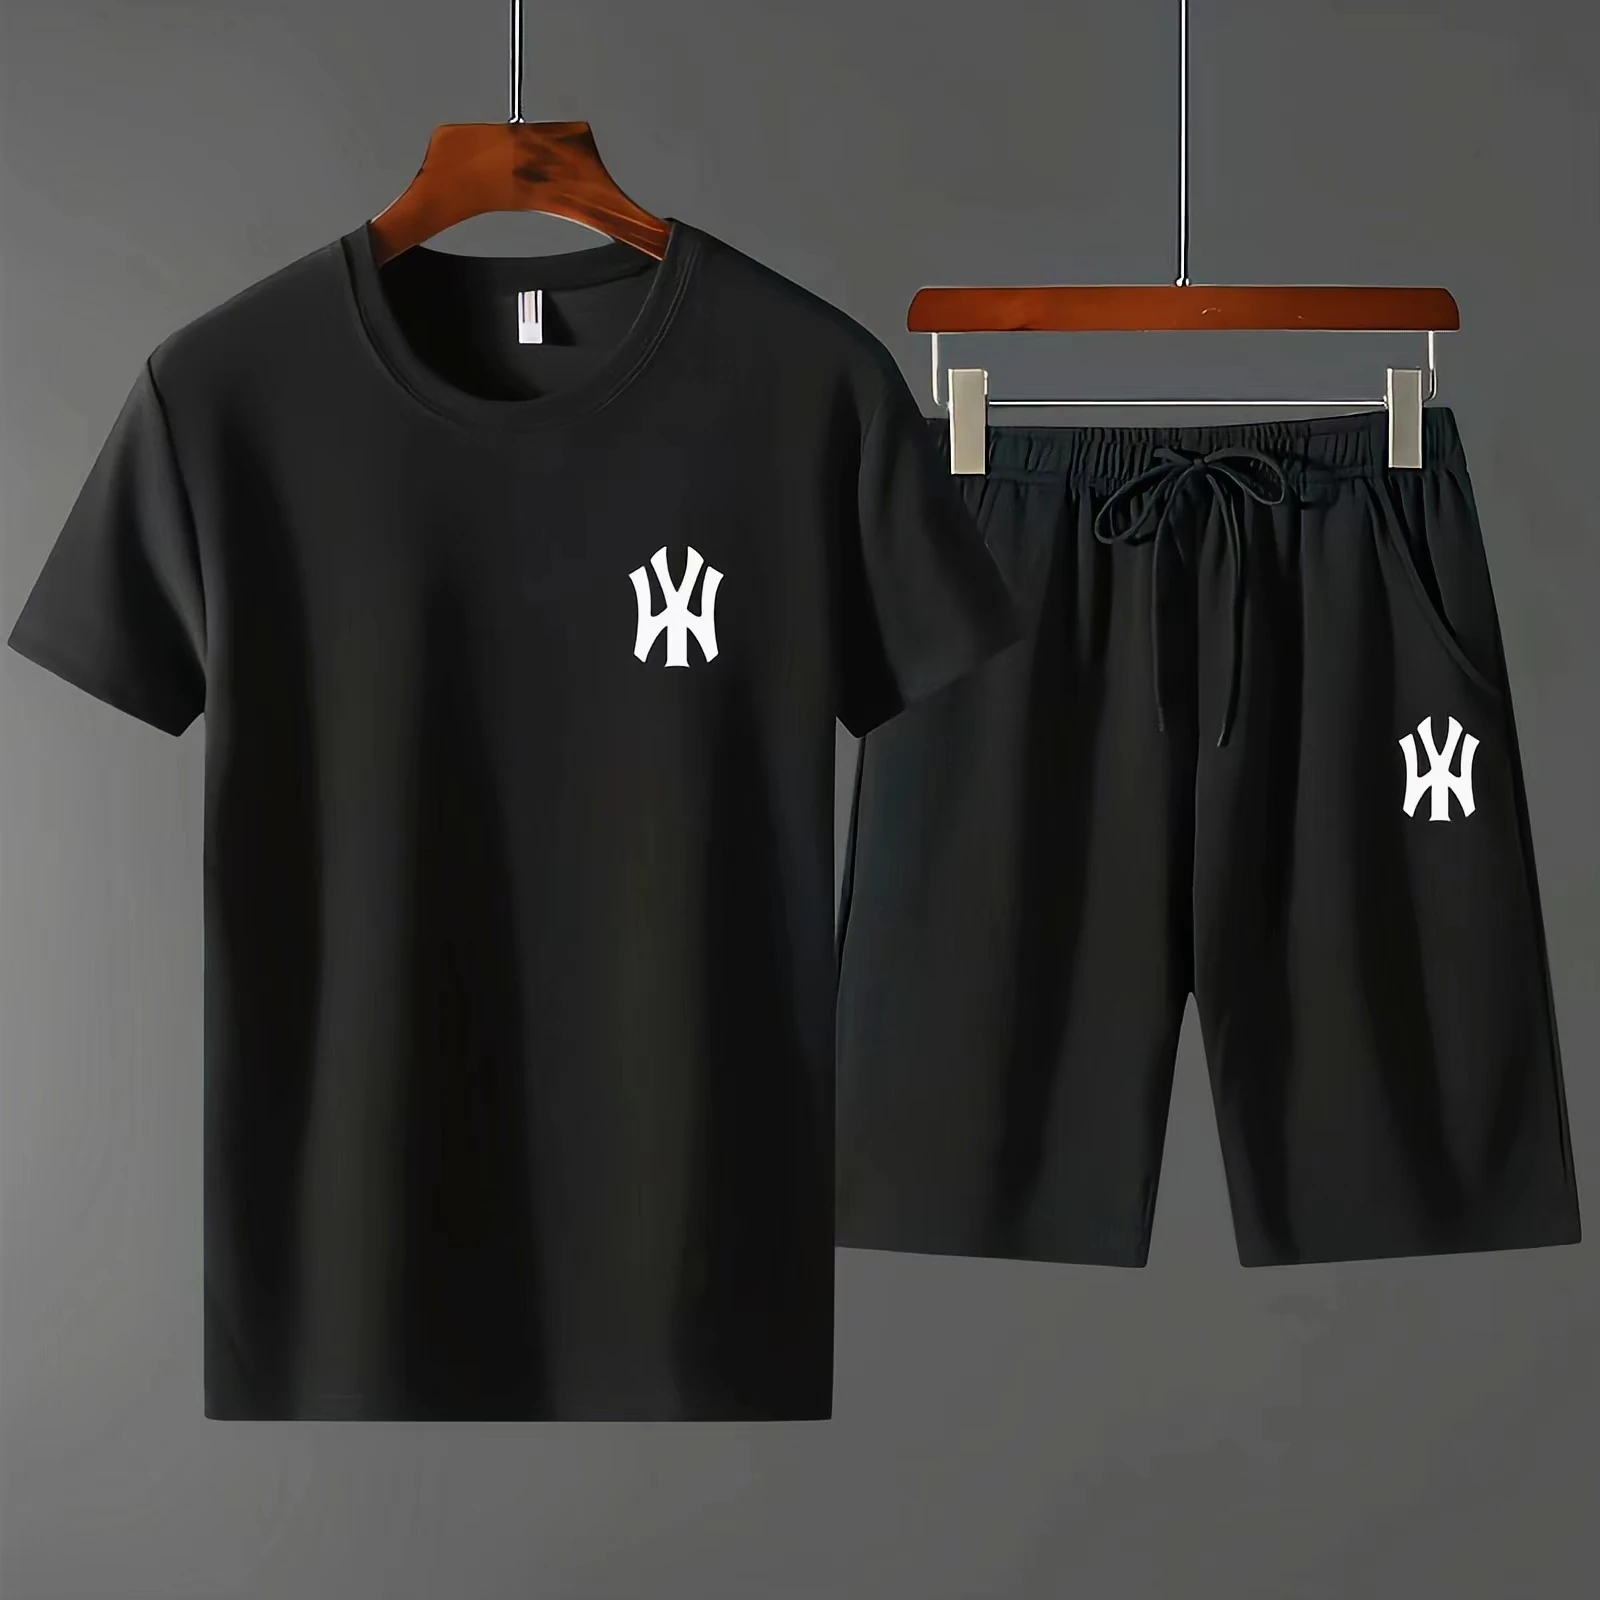 2023 Men's Trendy Brand T-shirt Summer Fashion Casual Sports Set Quick Dry 5/4 Shorts Short Sleeve Round Neck Clothing